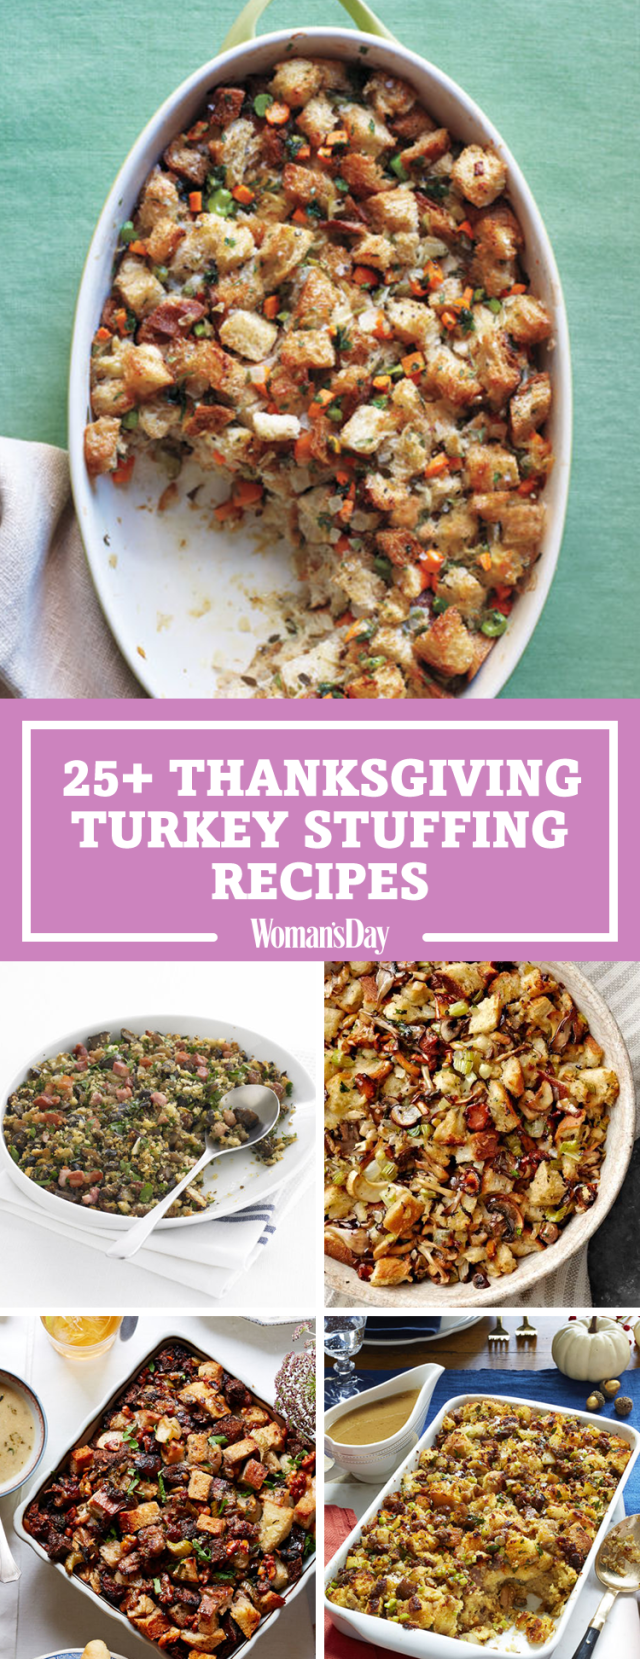 28 Best Turkey Stuffing Recipes - Easy Thanksgiving Stuffing Ideas 2017